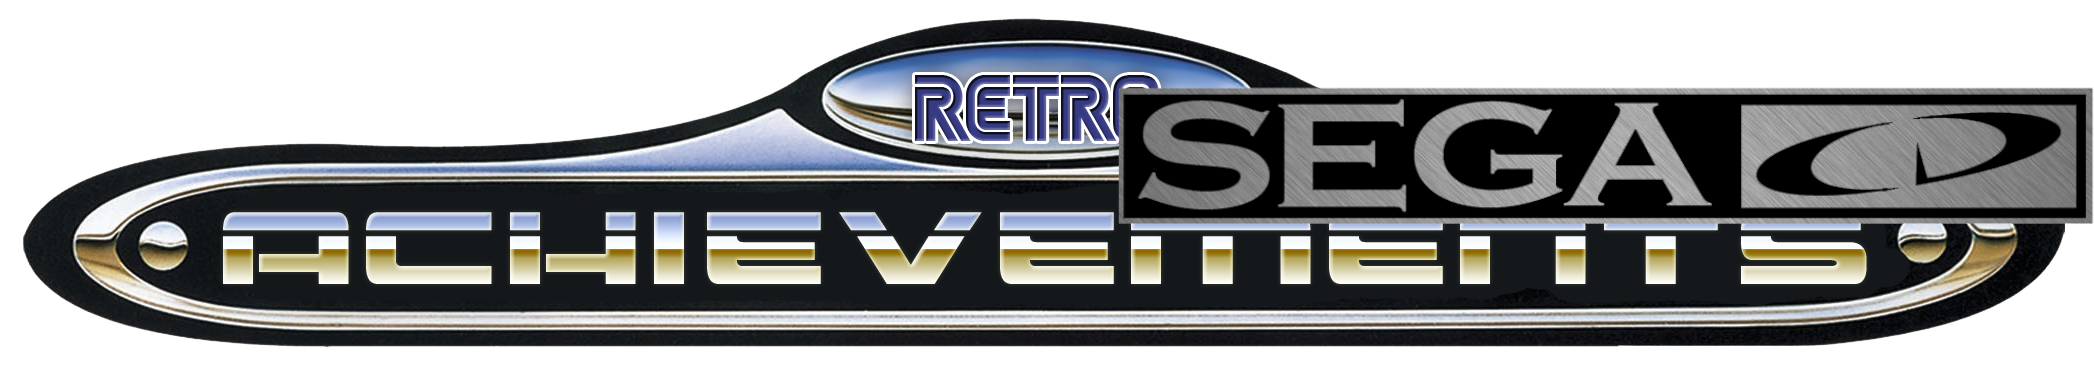 More information about "Sega CD Retroachievements Playlist - xml - clear logo - video"